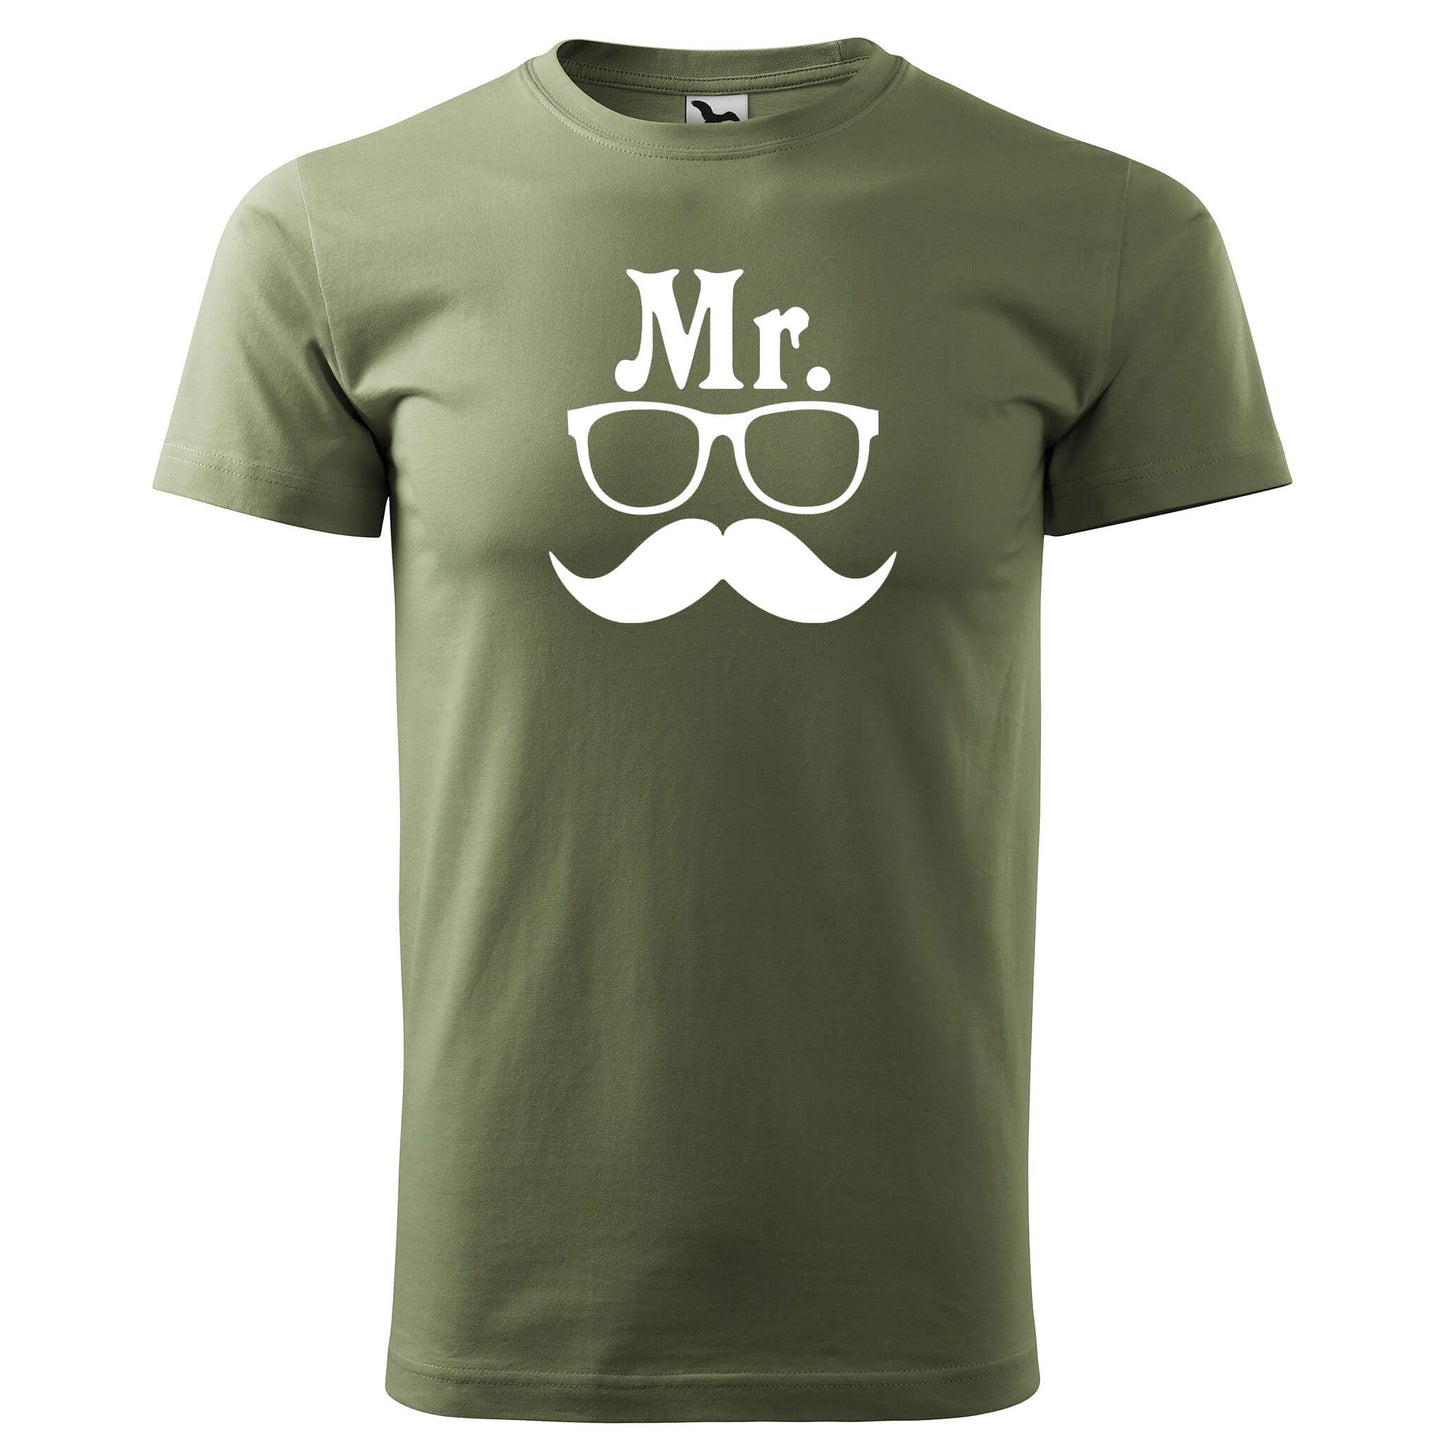 T-shirt - Mr. - rvdesignprint